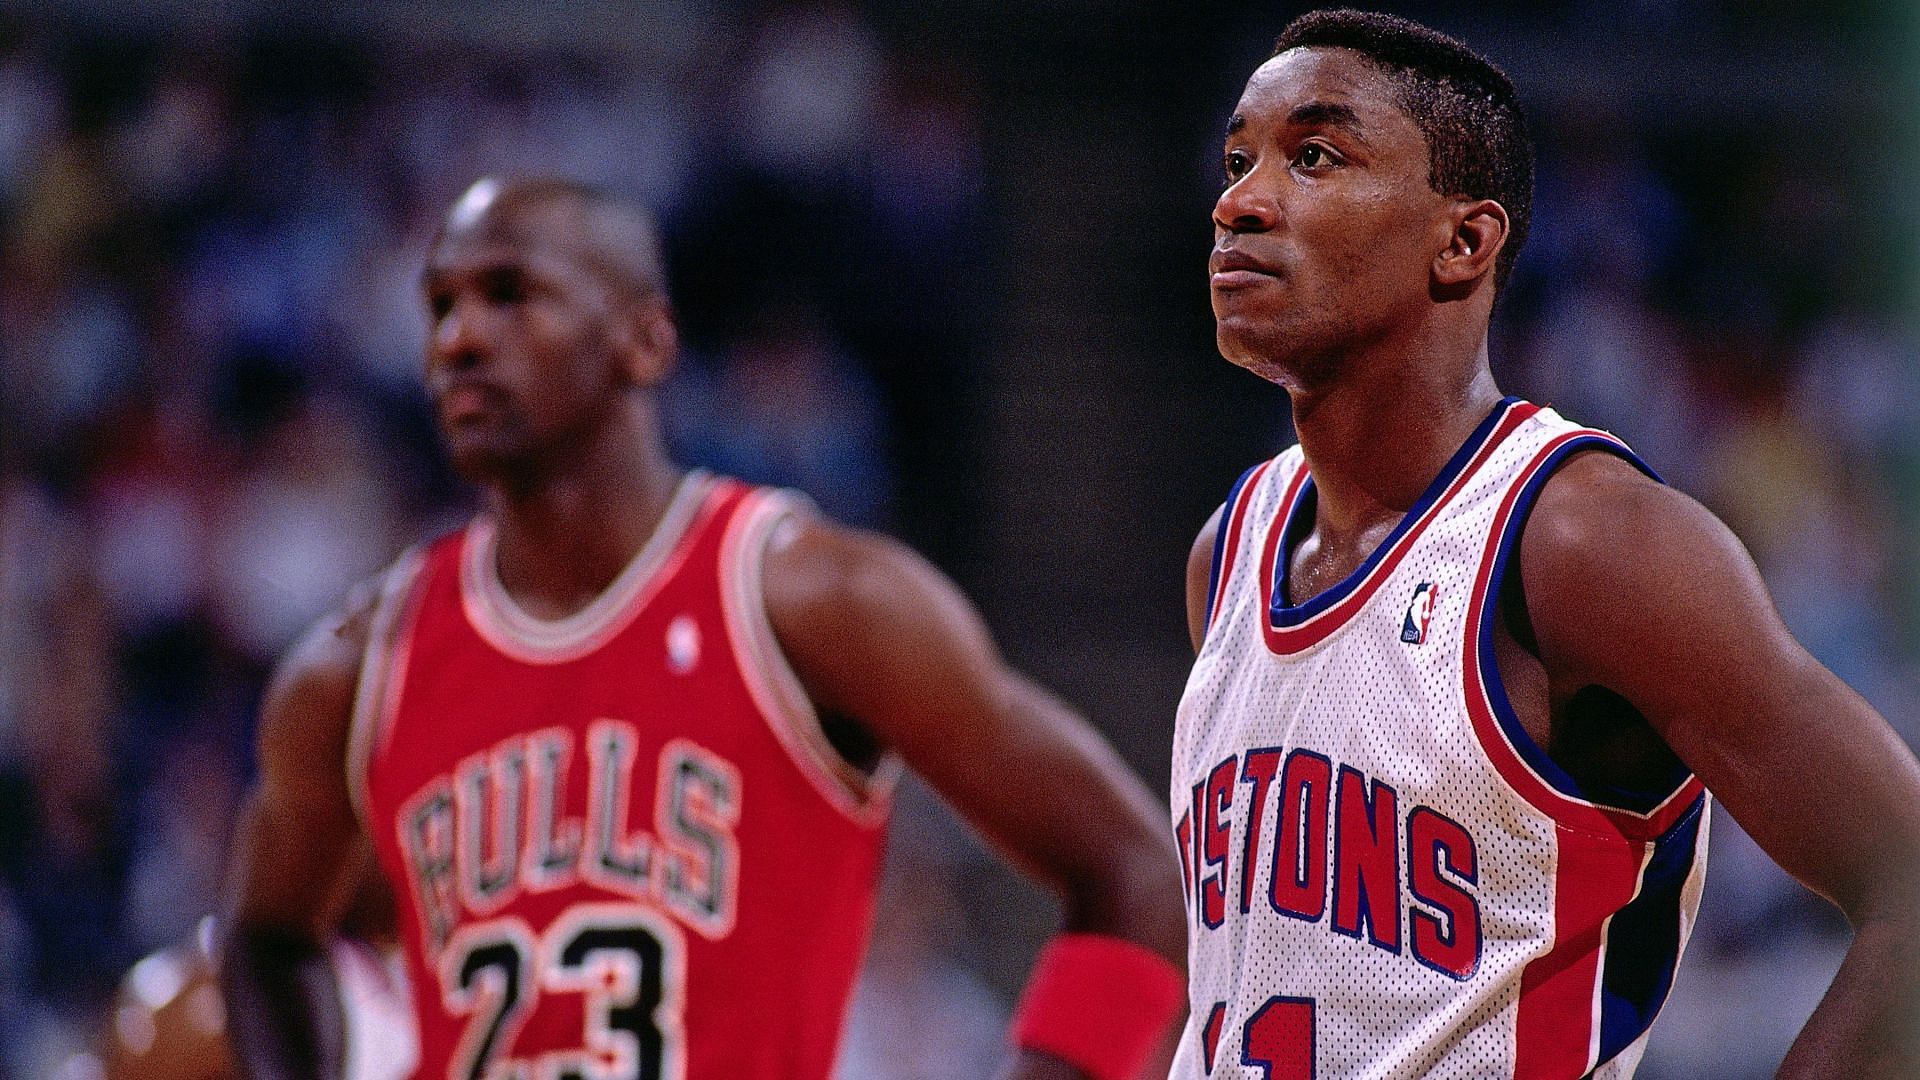 Detroit Pistons Isiah Thomas and Chicago Bulls Michael Jordan